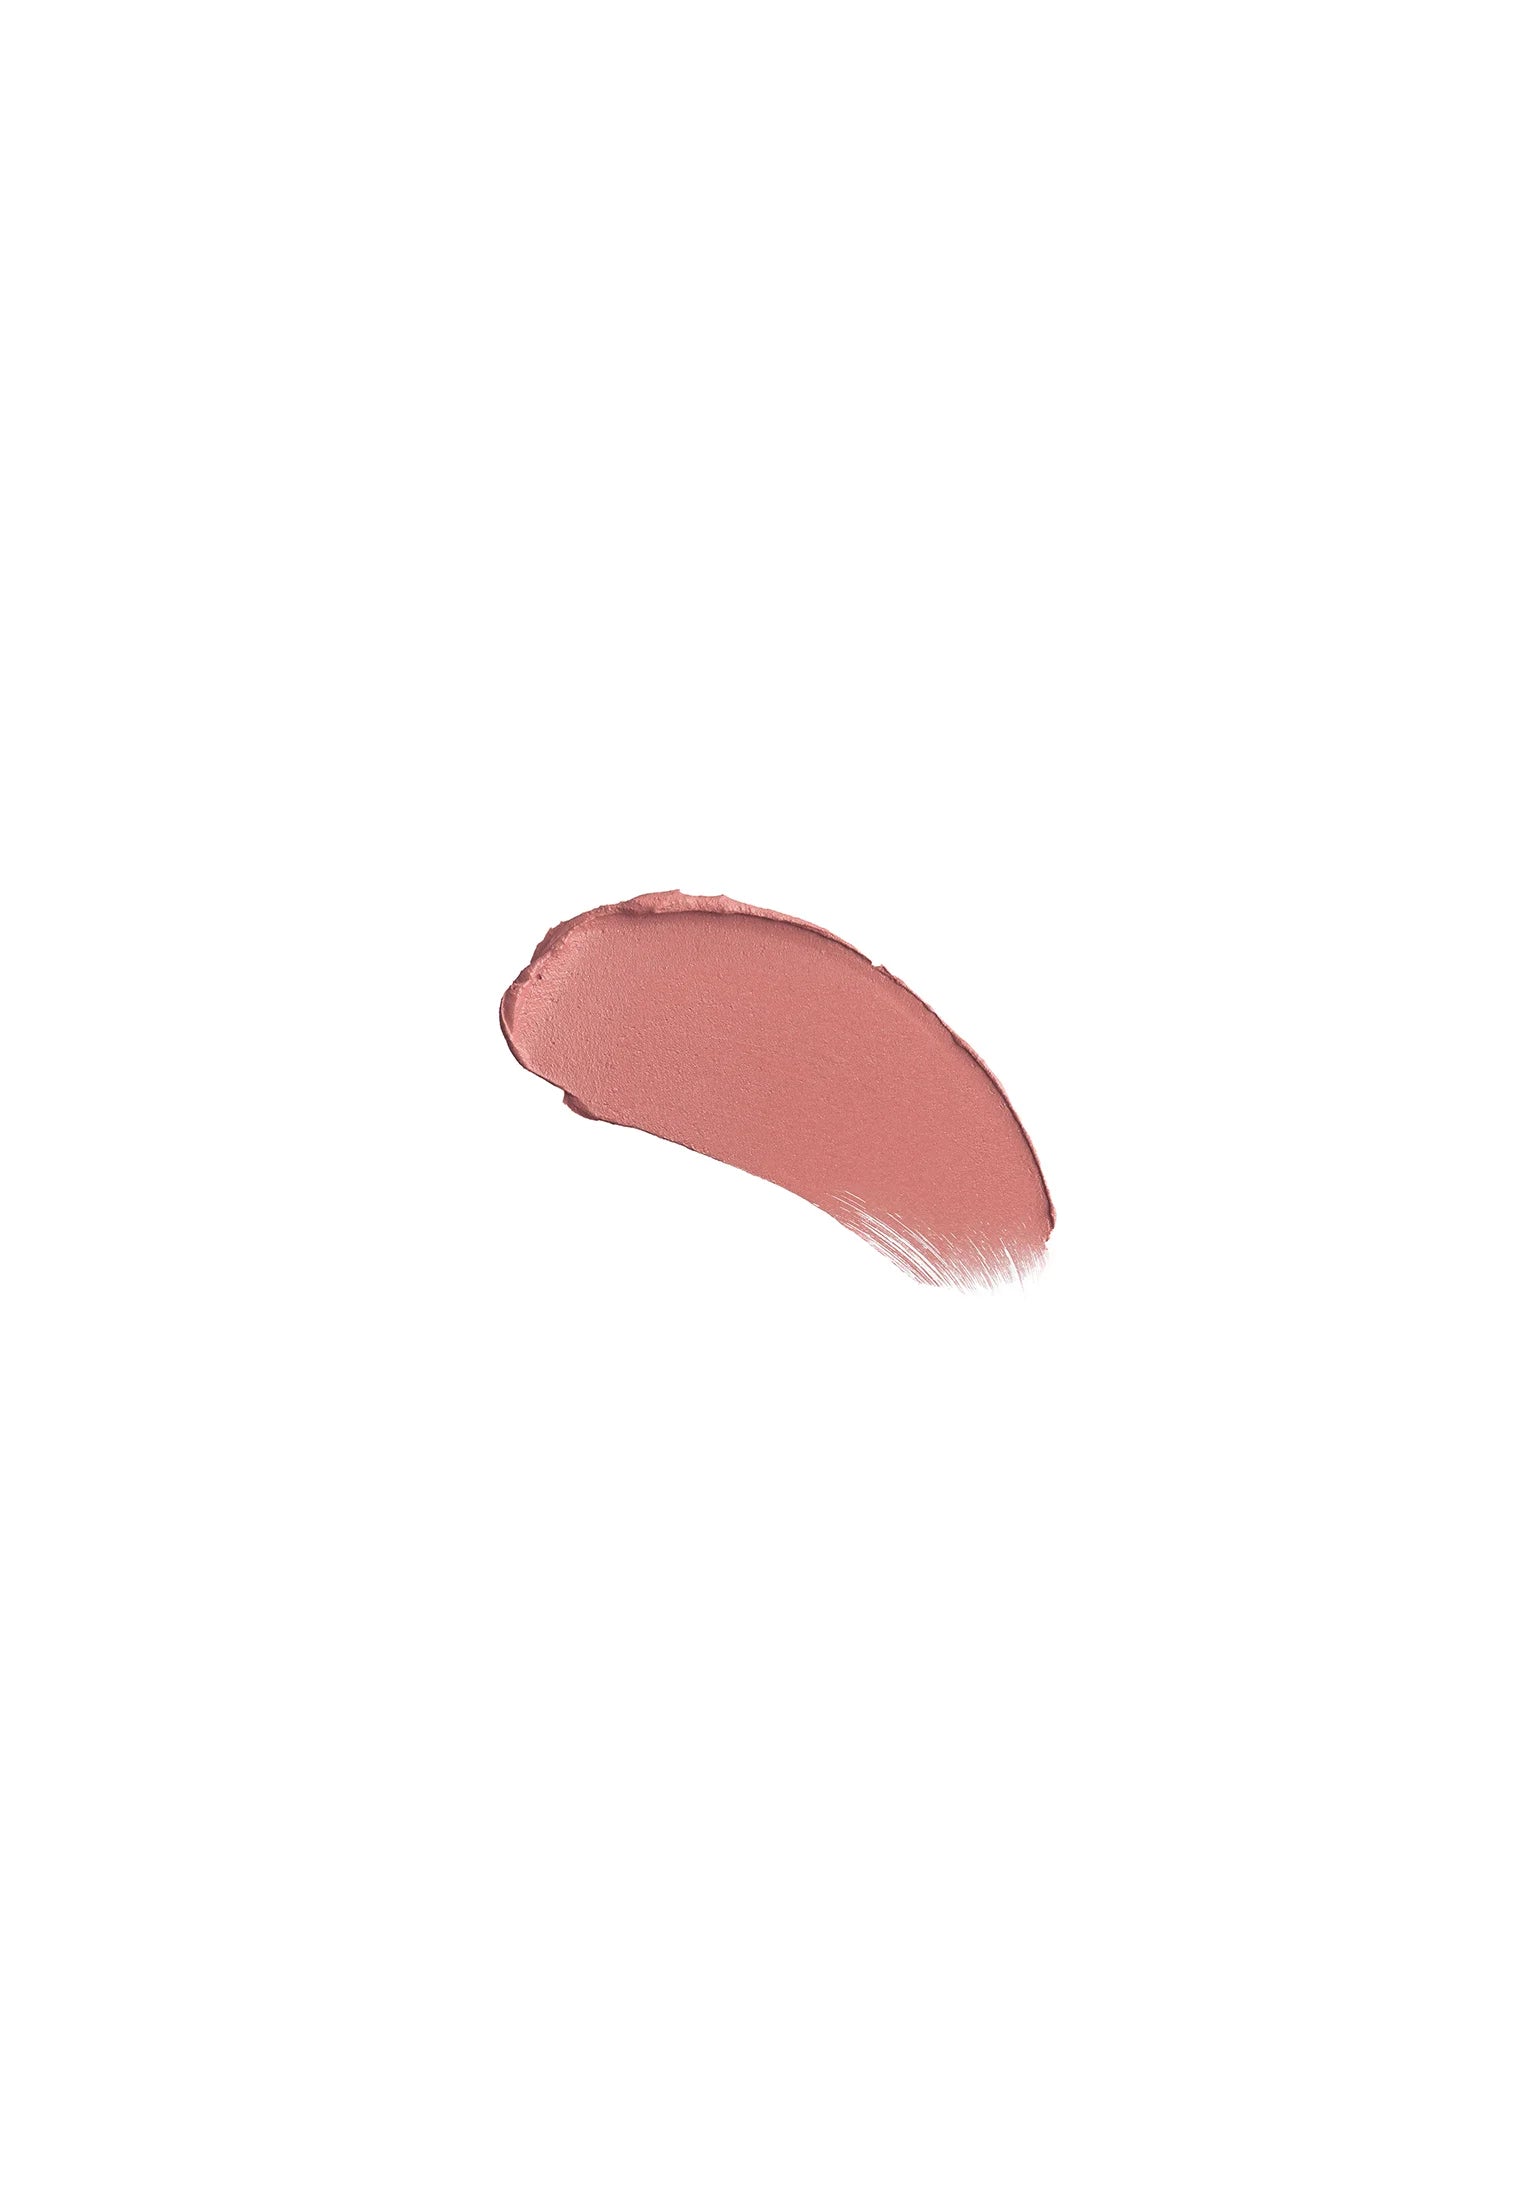 Charlotte Tilbury Matte Revolution Lipstick- Pillow Talk 3.5g